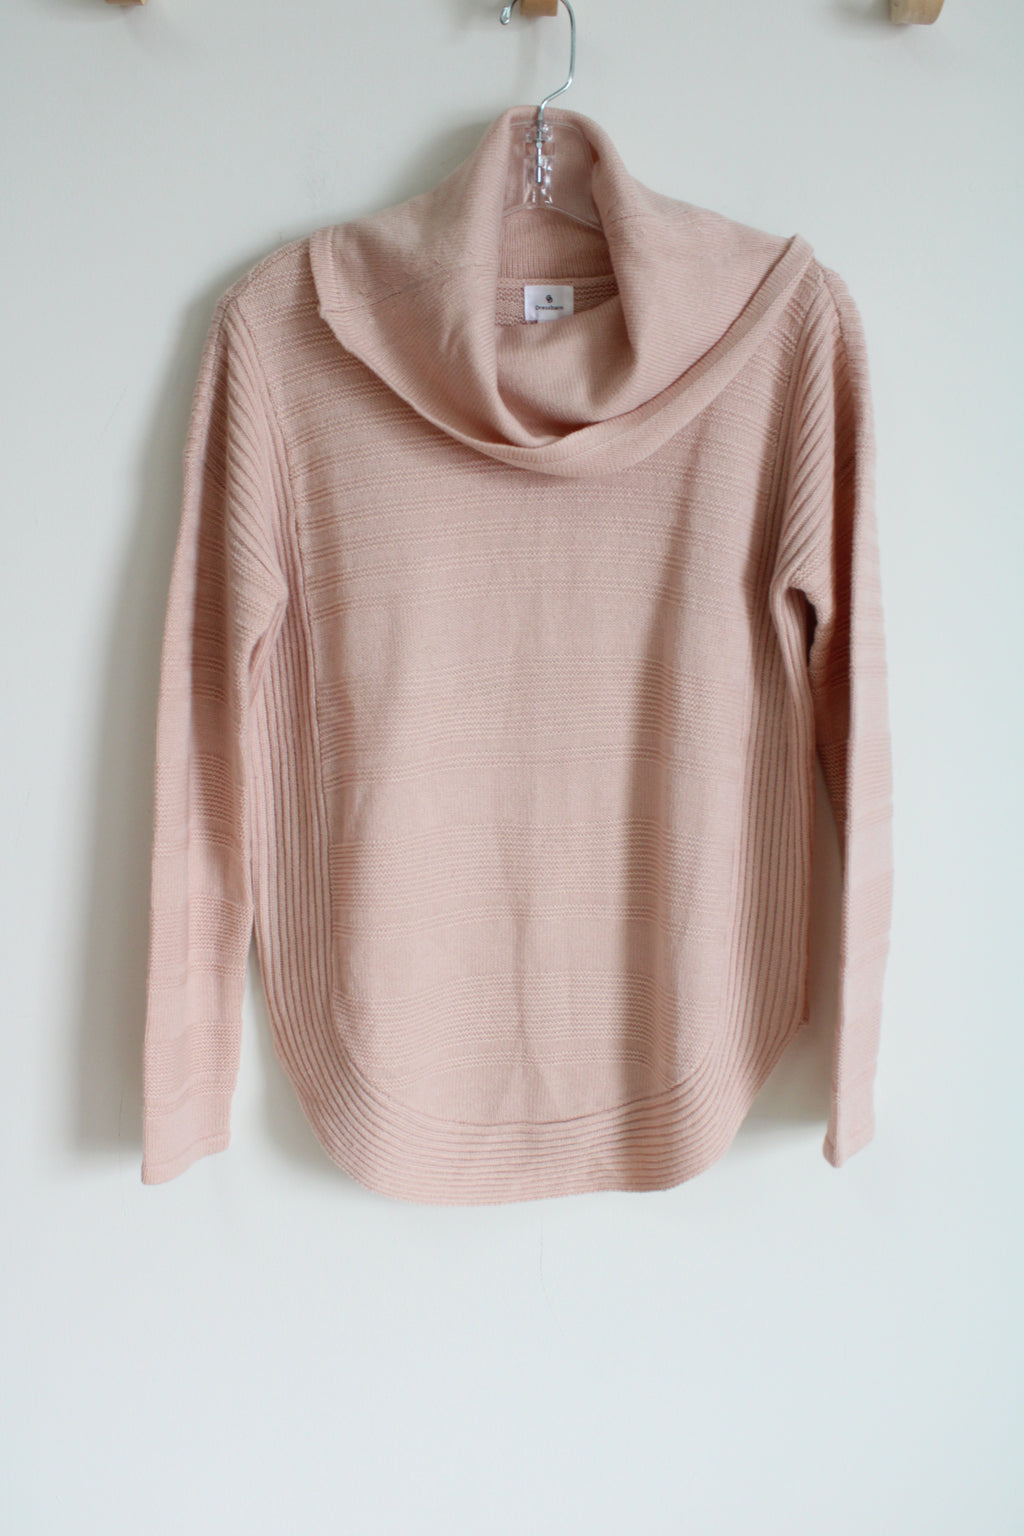 Dressbarn Soft Pink Turtleneck Sweater | XS